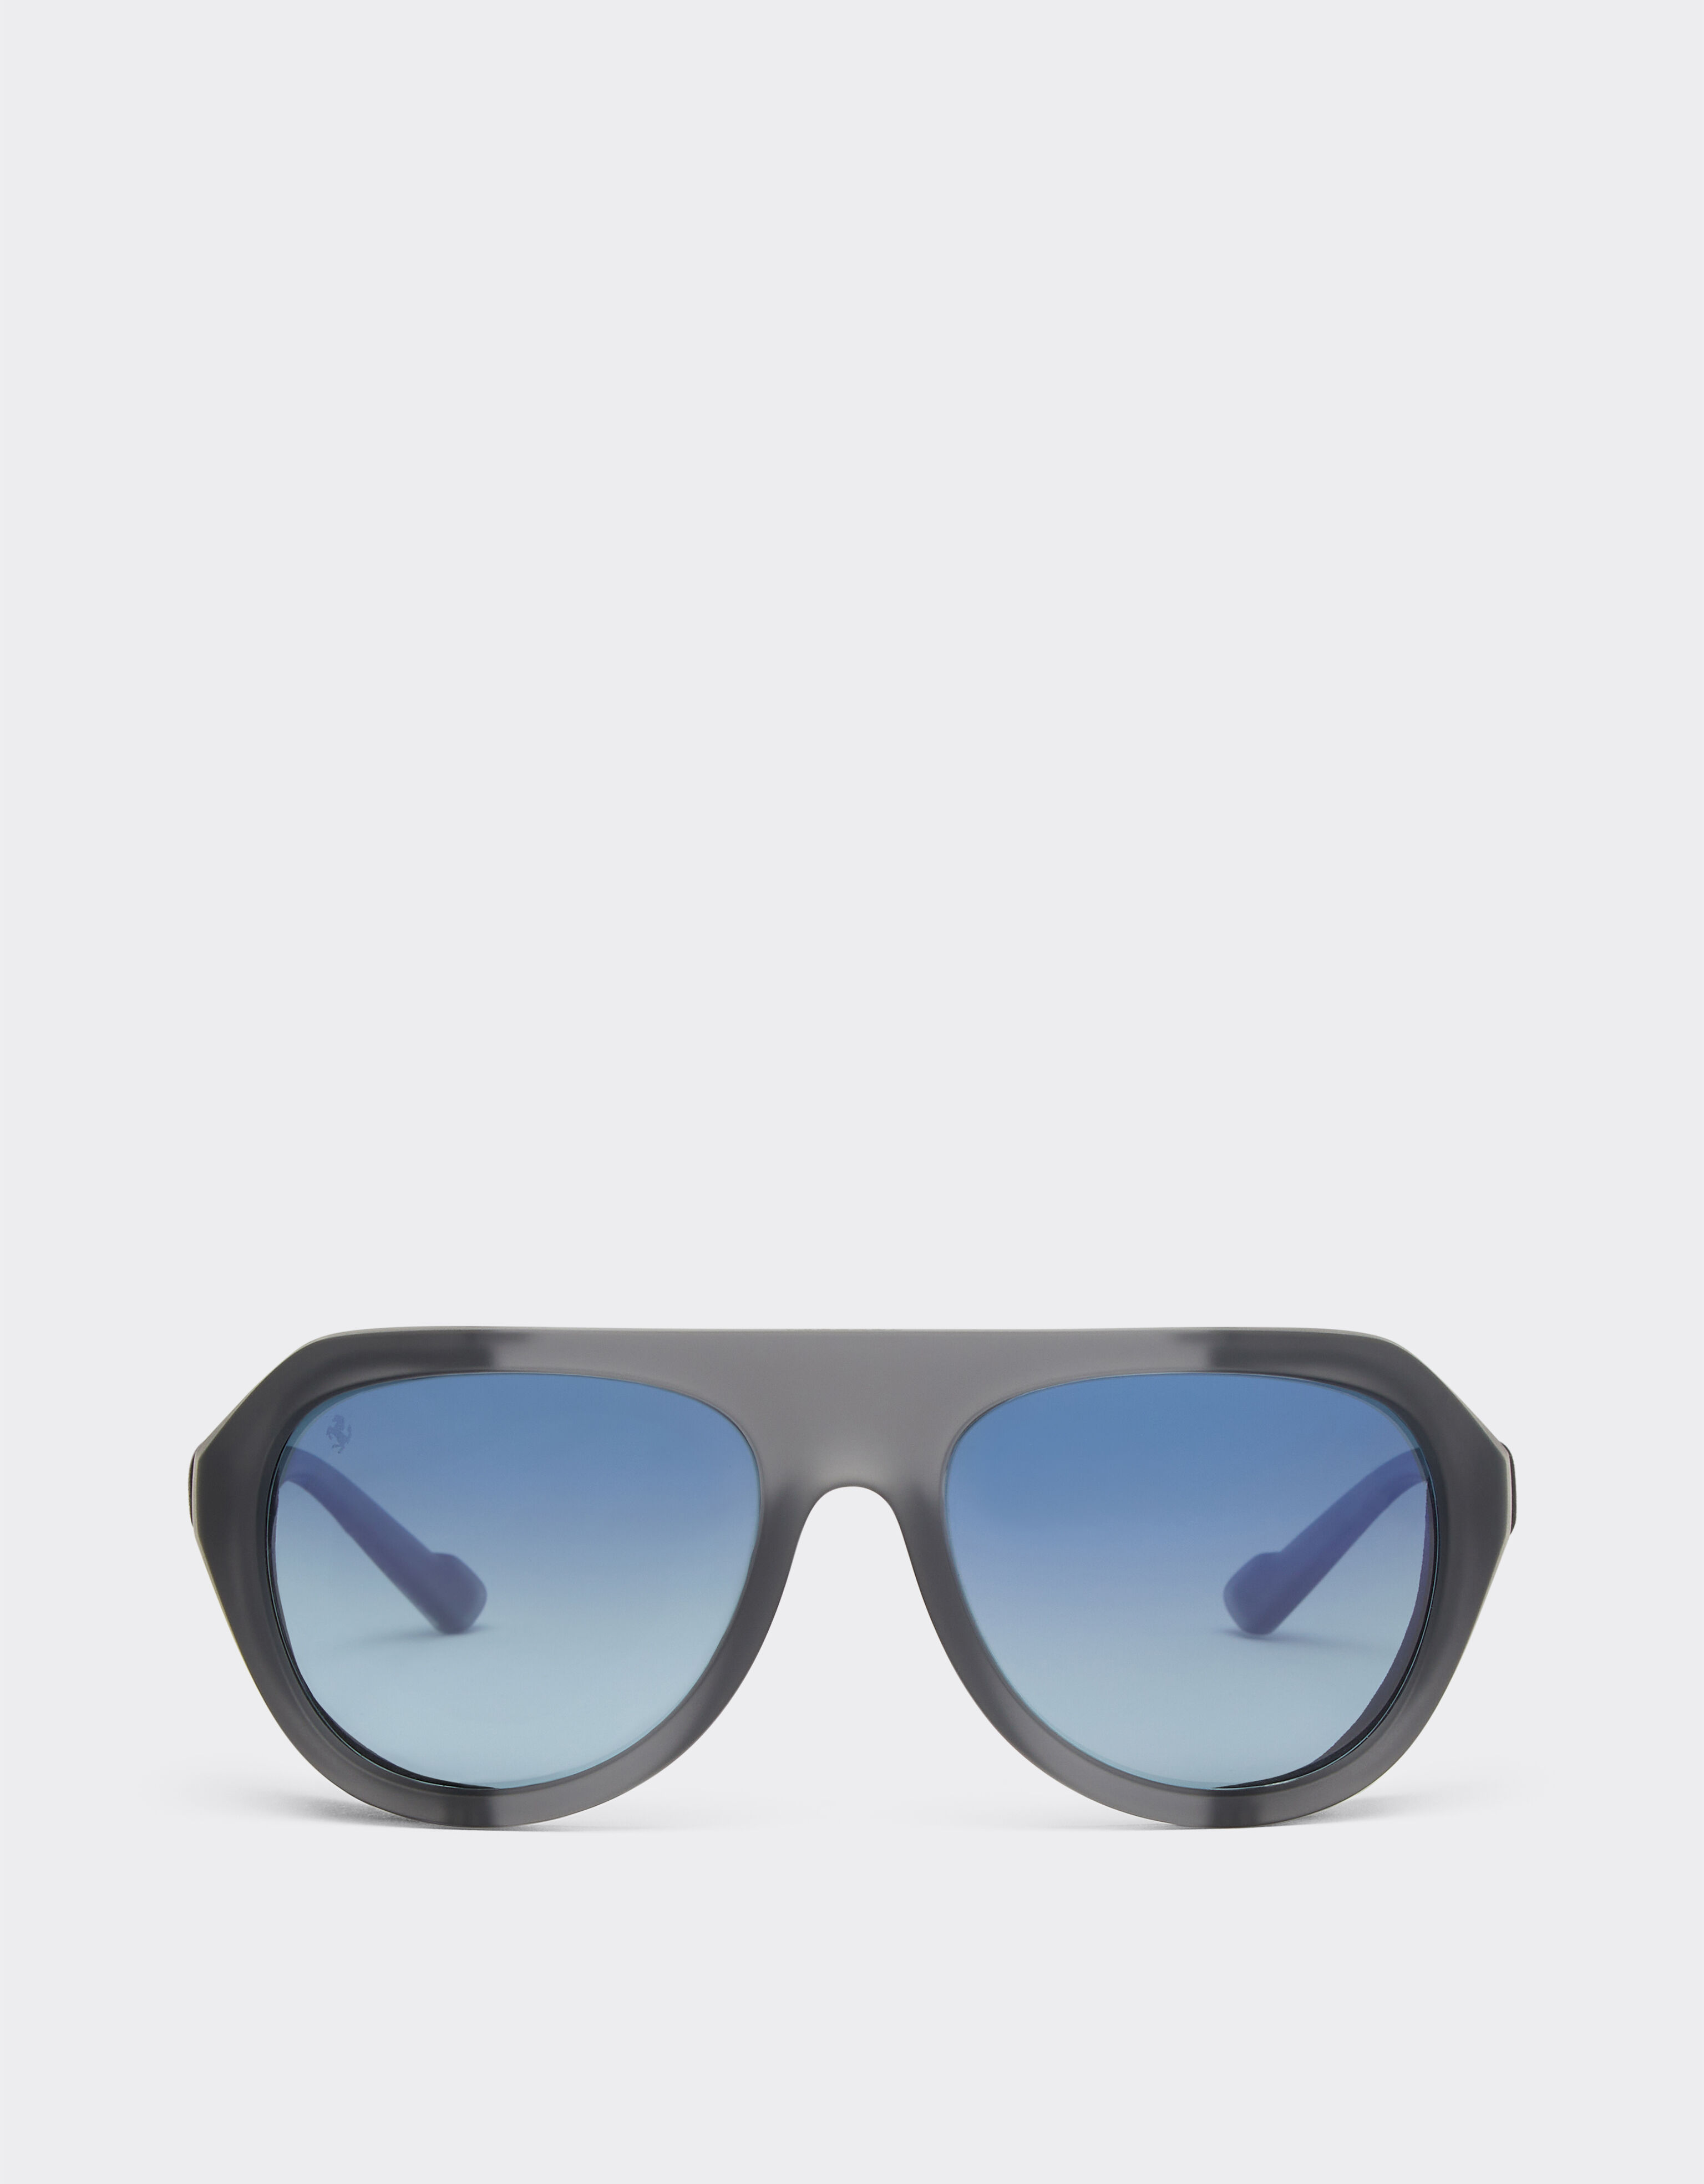 Ferrari Ferrari matt grey sunglasses with leather details and polarised lenses Black Matt F1250f